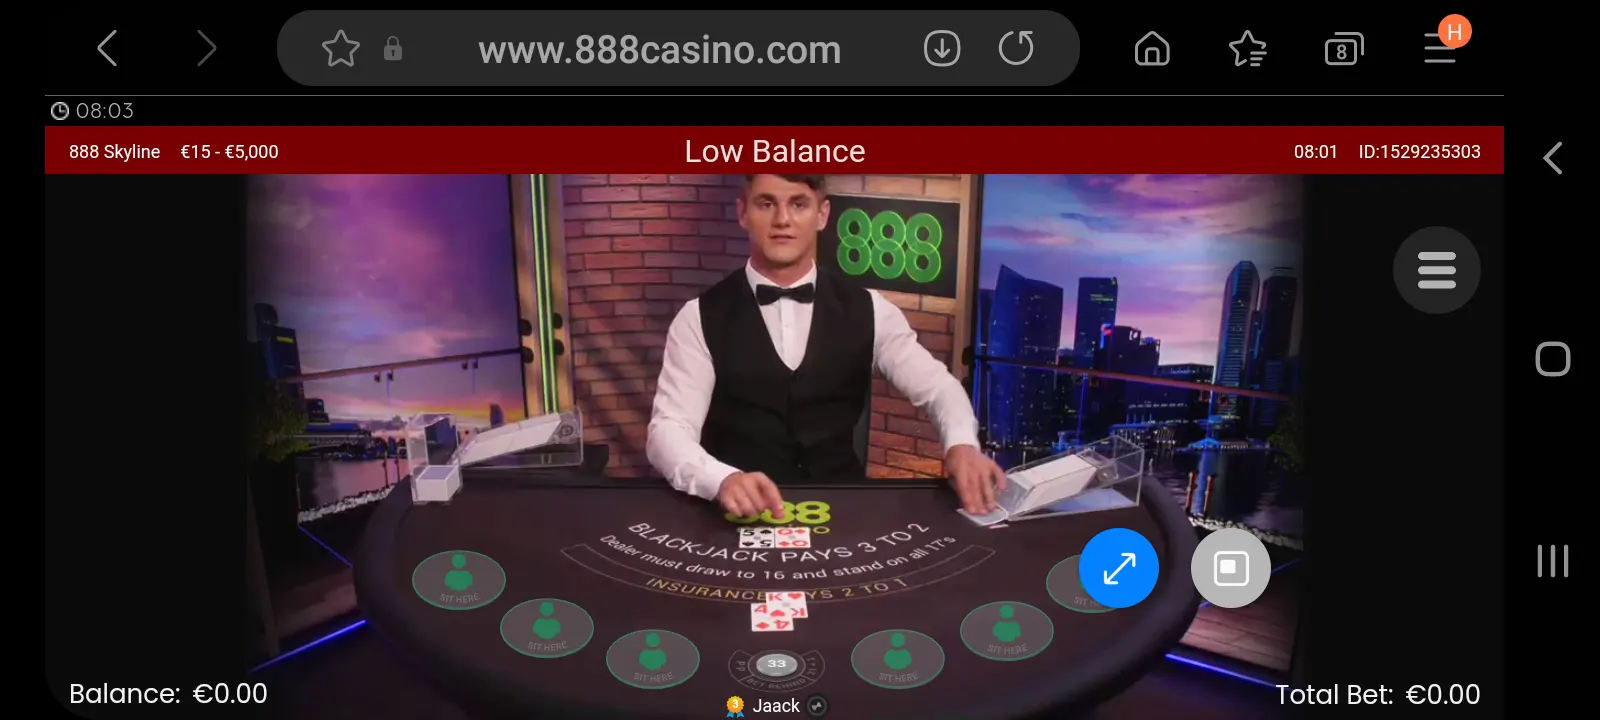 888casino app screenshot 10